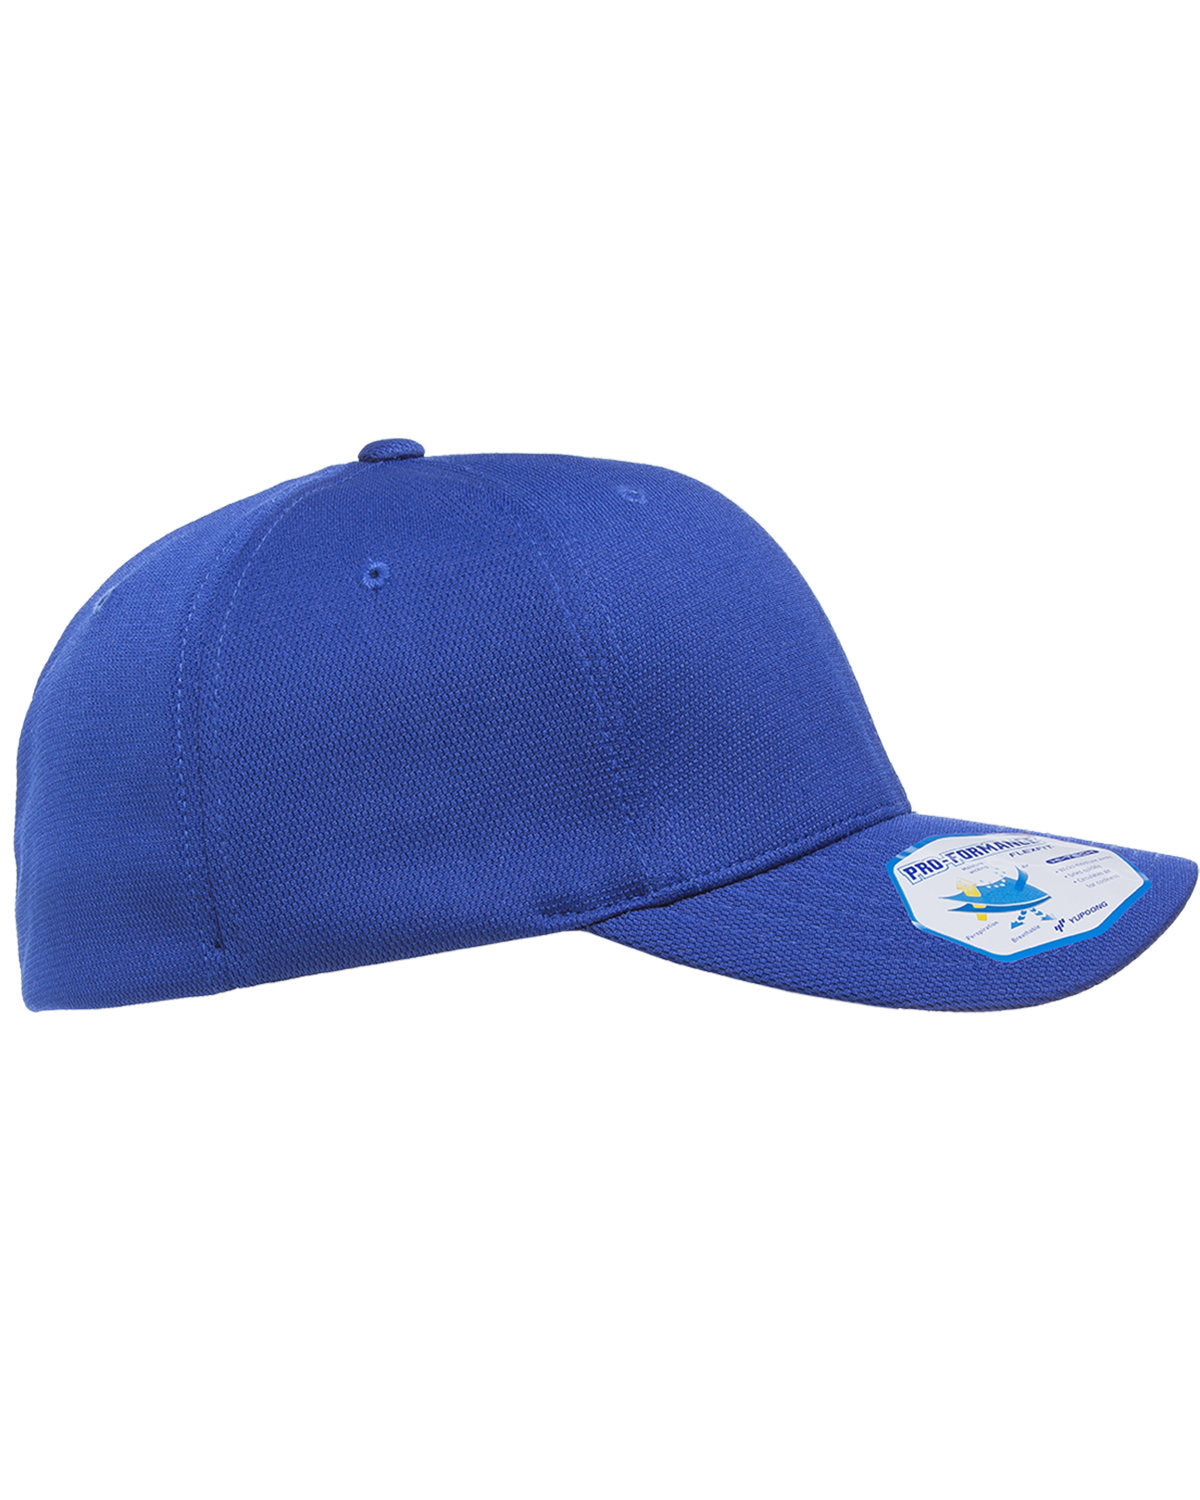 Flexfit Cool & Dry Sport Customized Caps, Royal